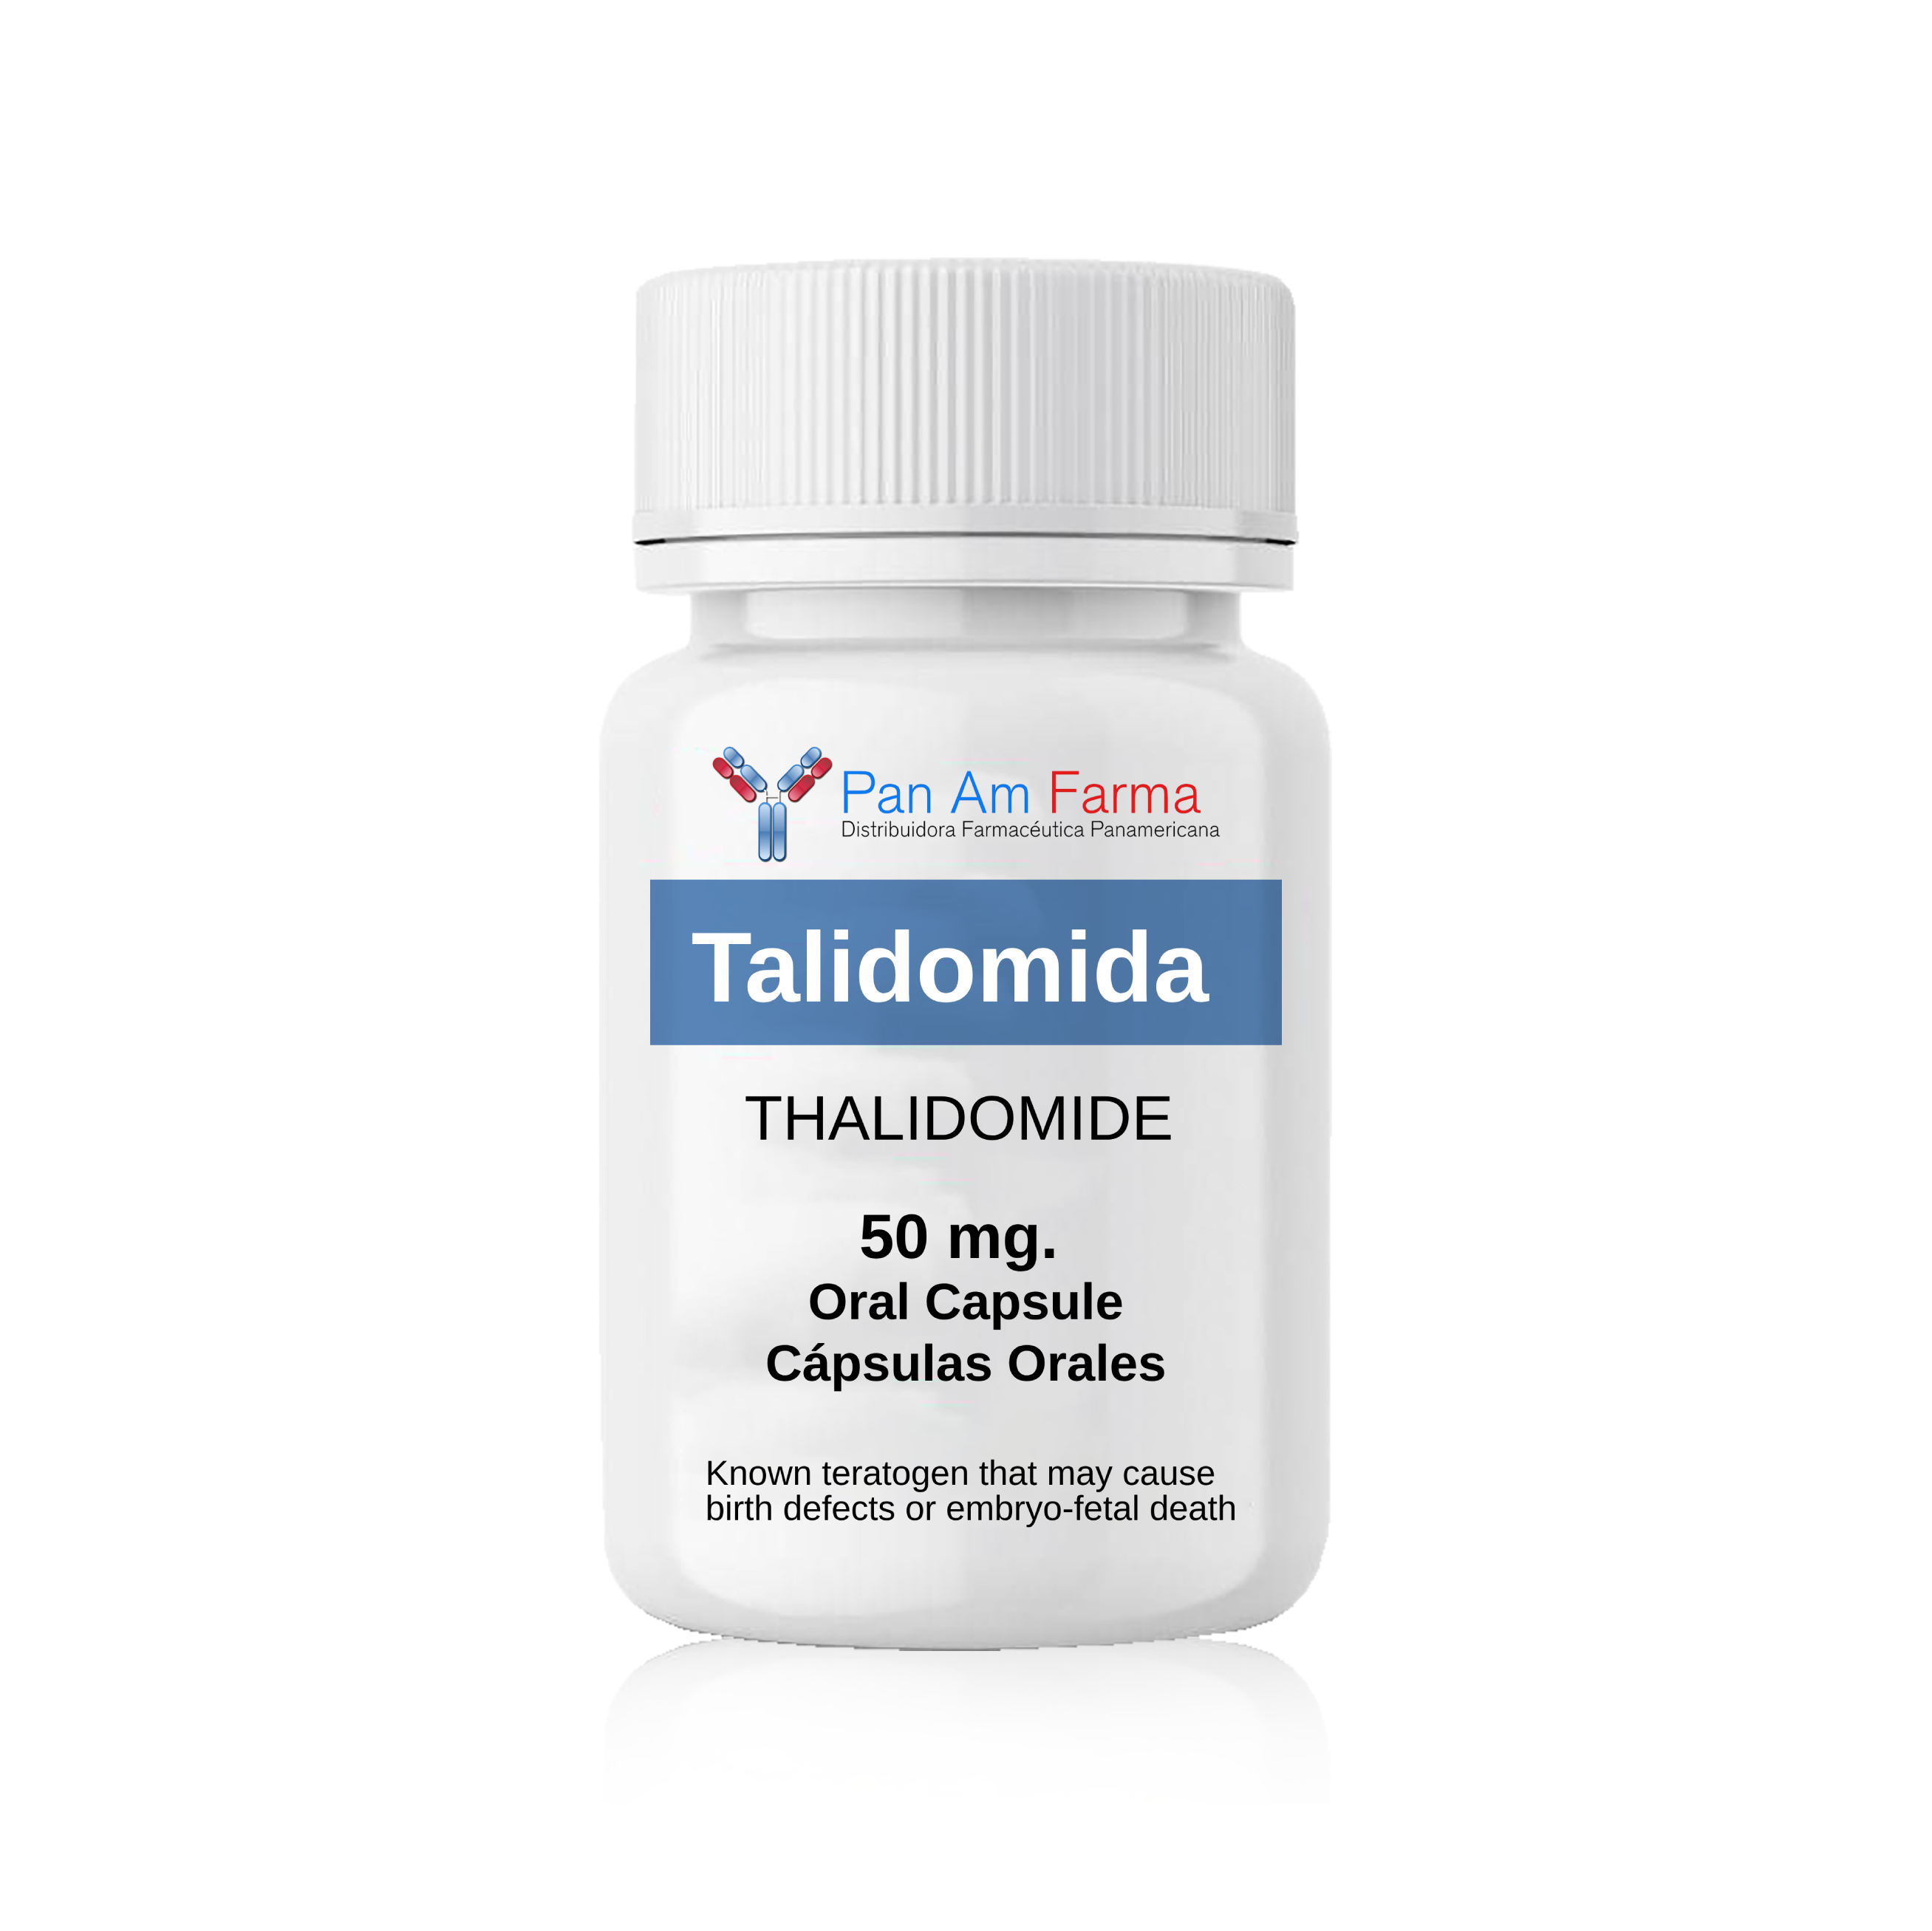 Thalidomide / Talidomida